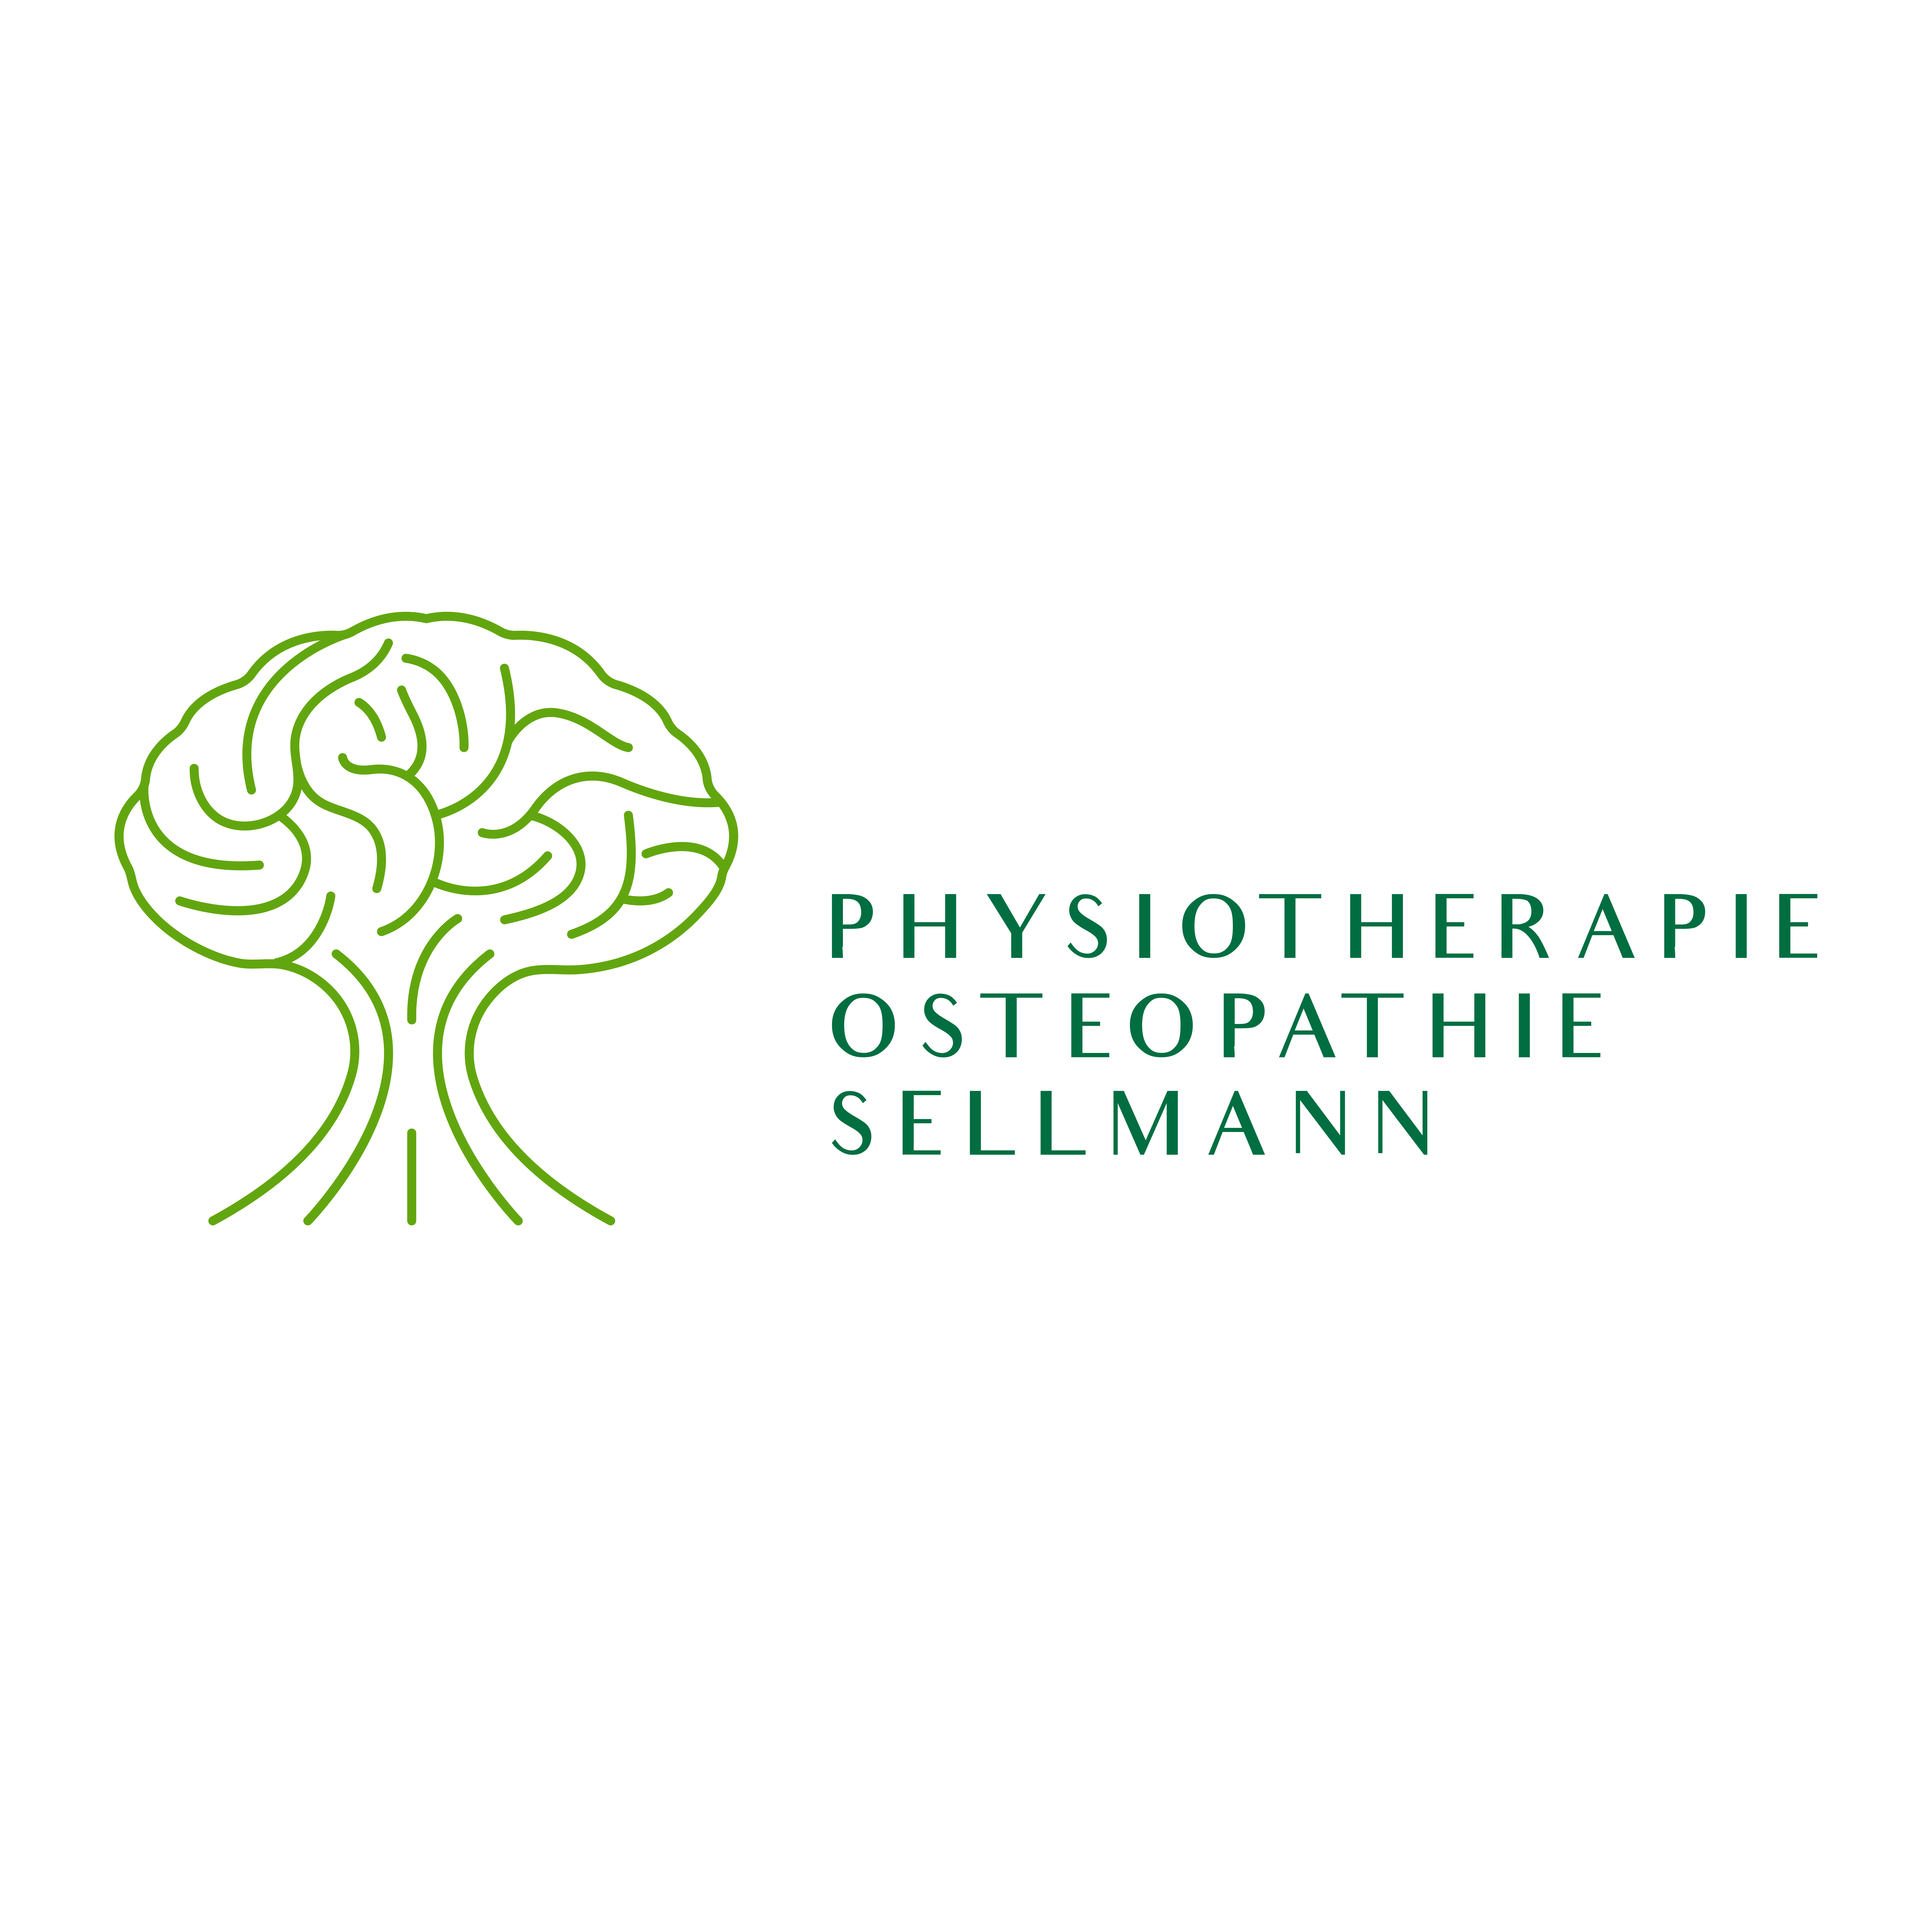 Physiotherapie & Osteopathie Sellmann in Malente